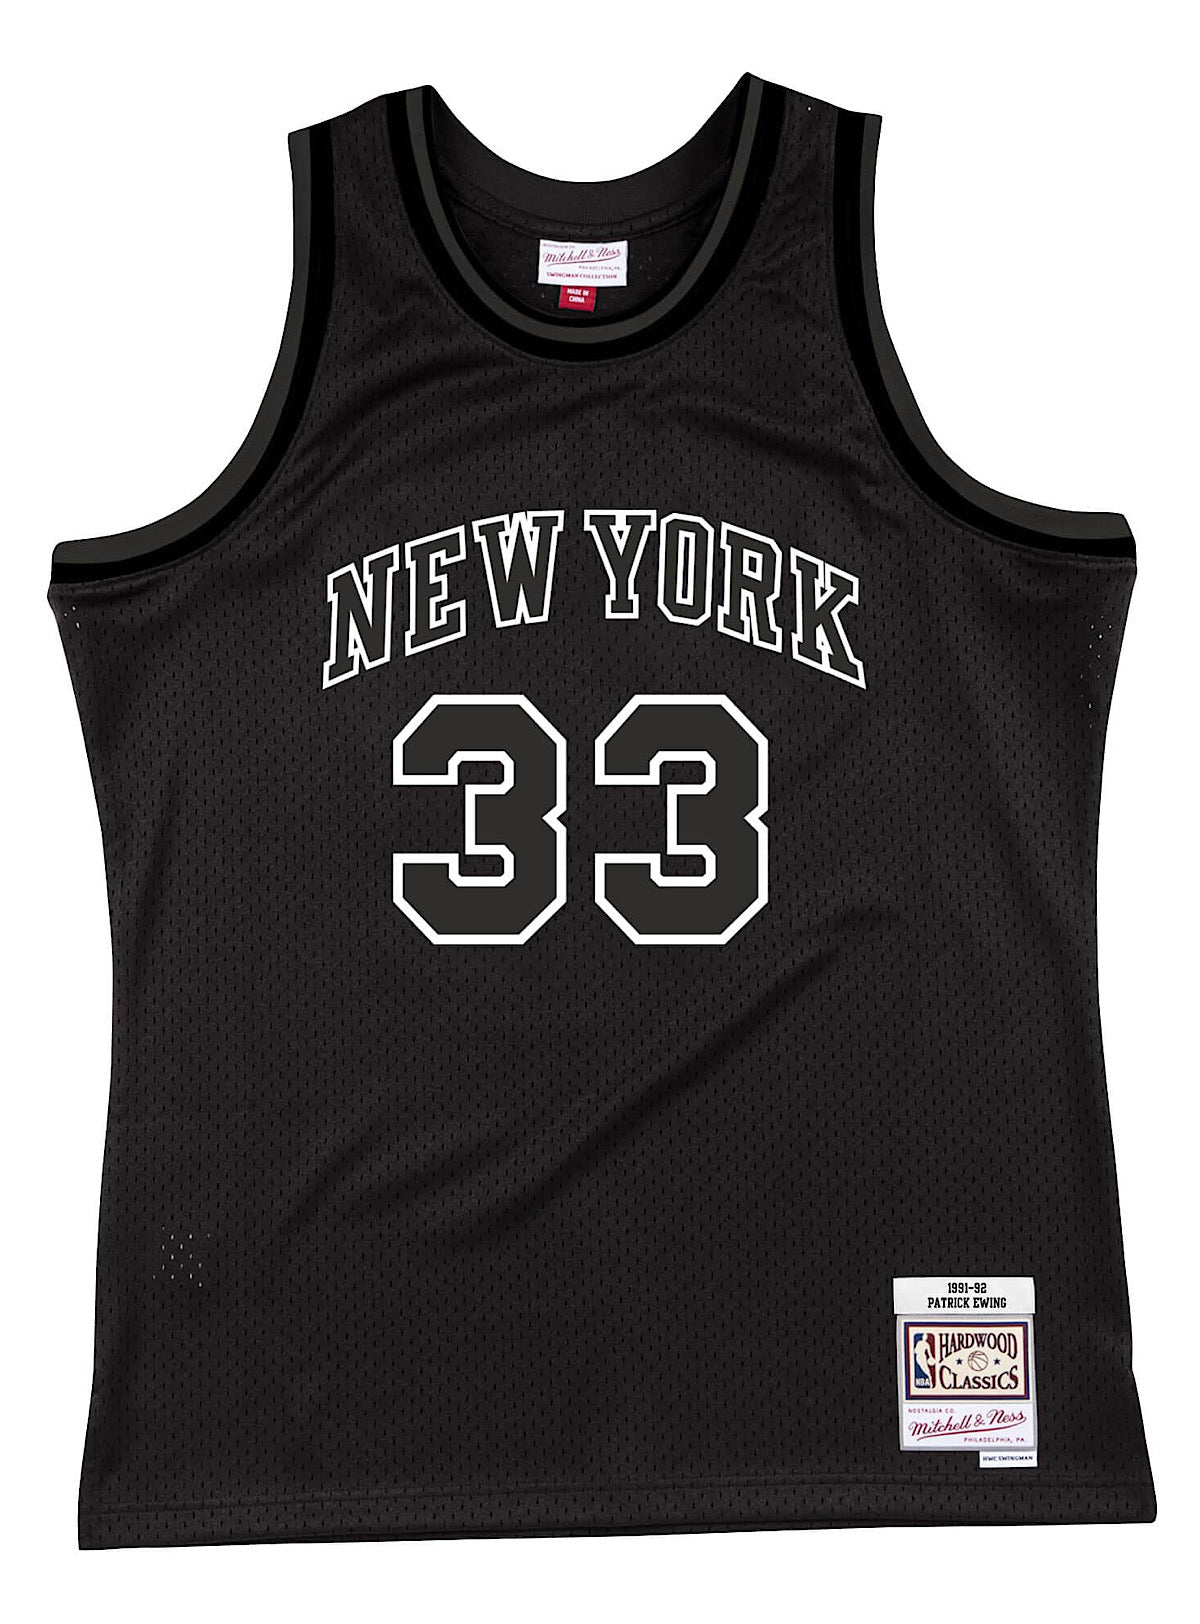 Mitchell & Ness A$AP Ferg x New York Knicks Swingman Jersey Black Men's -  FW20 - US